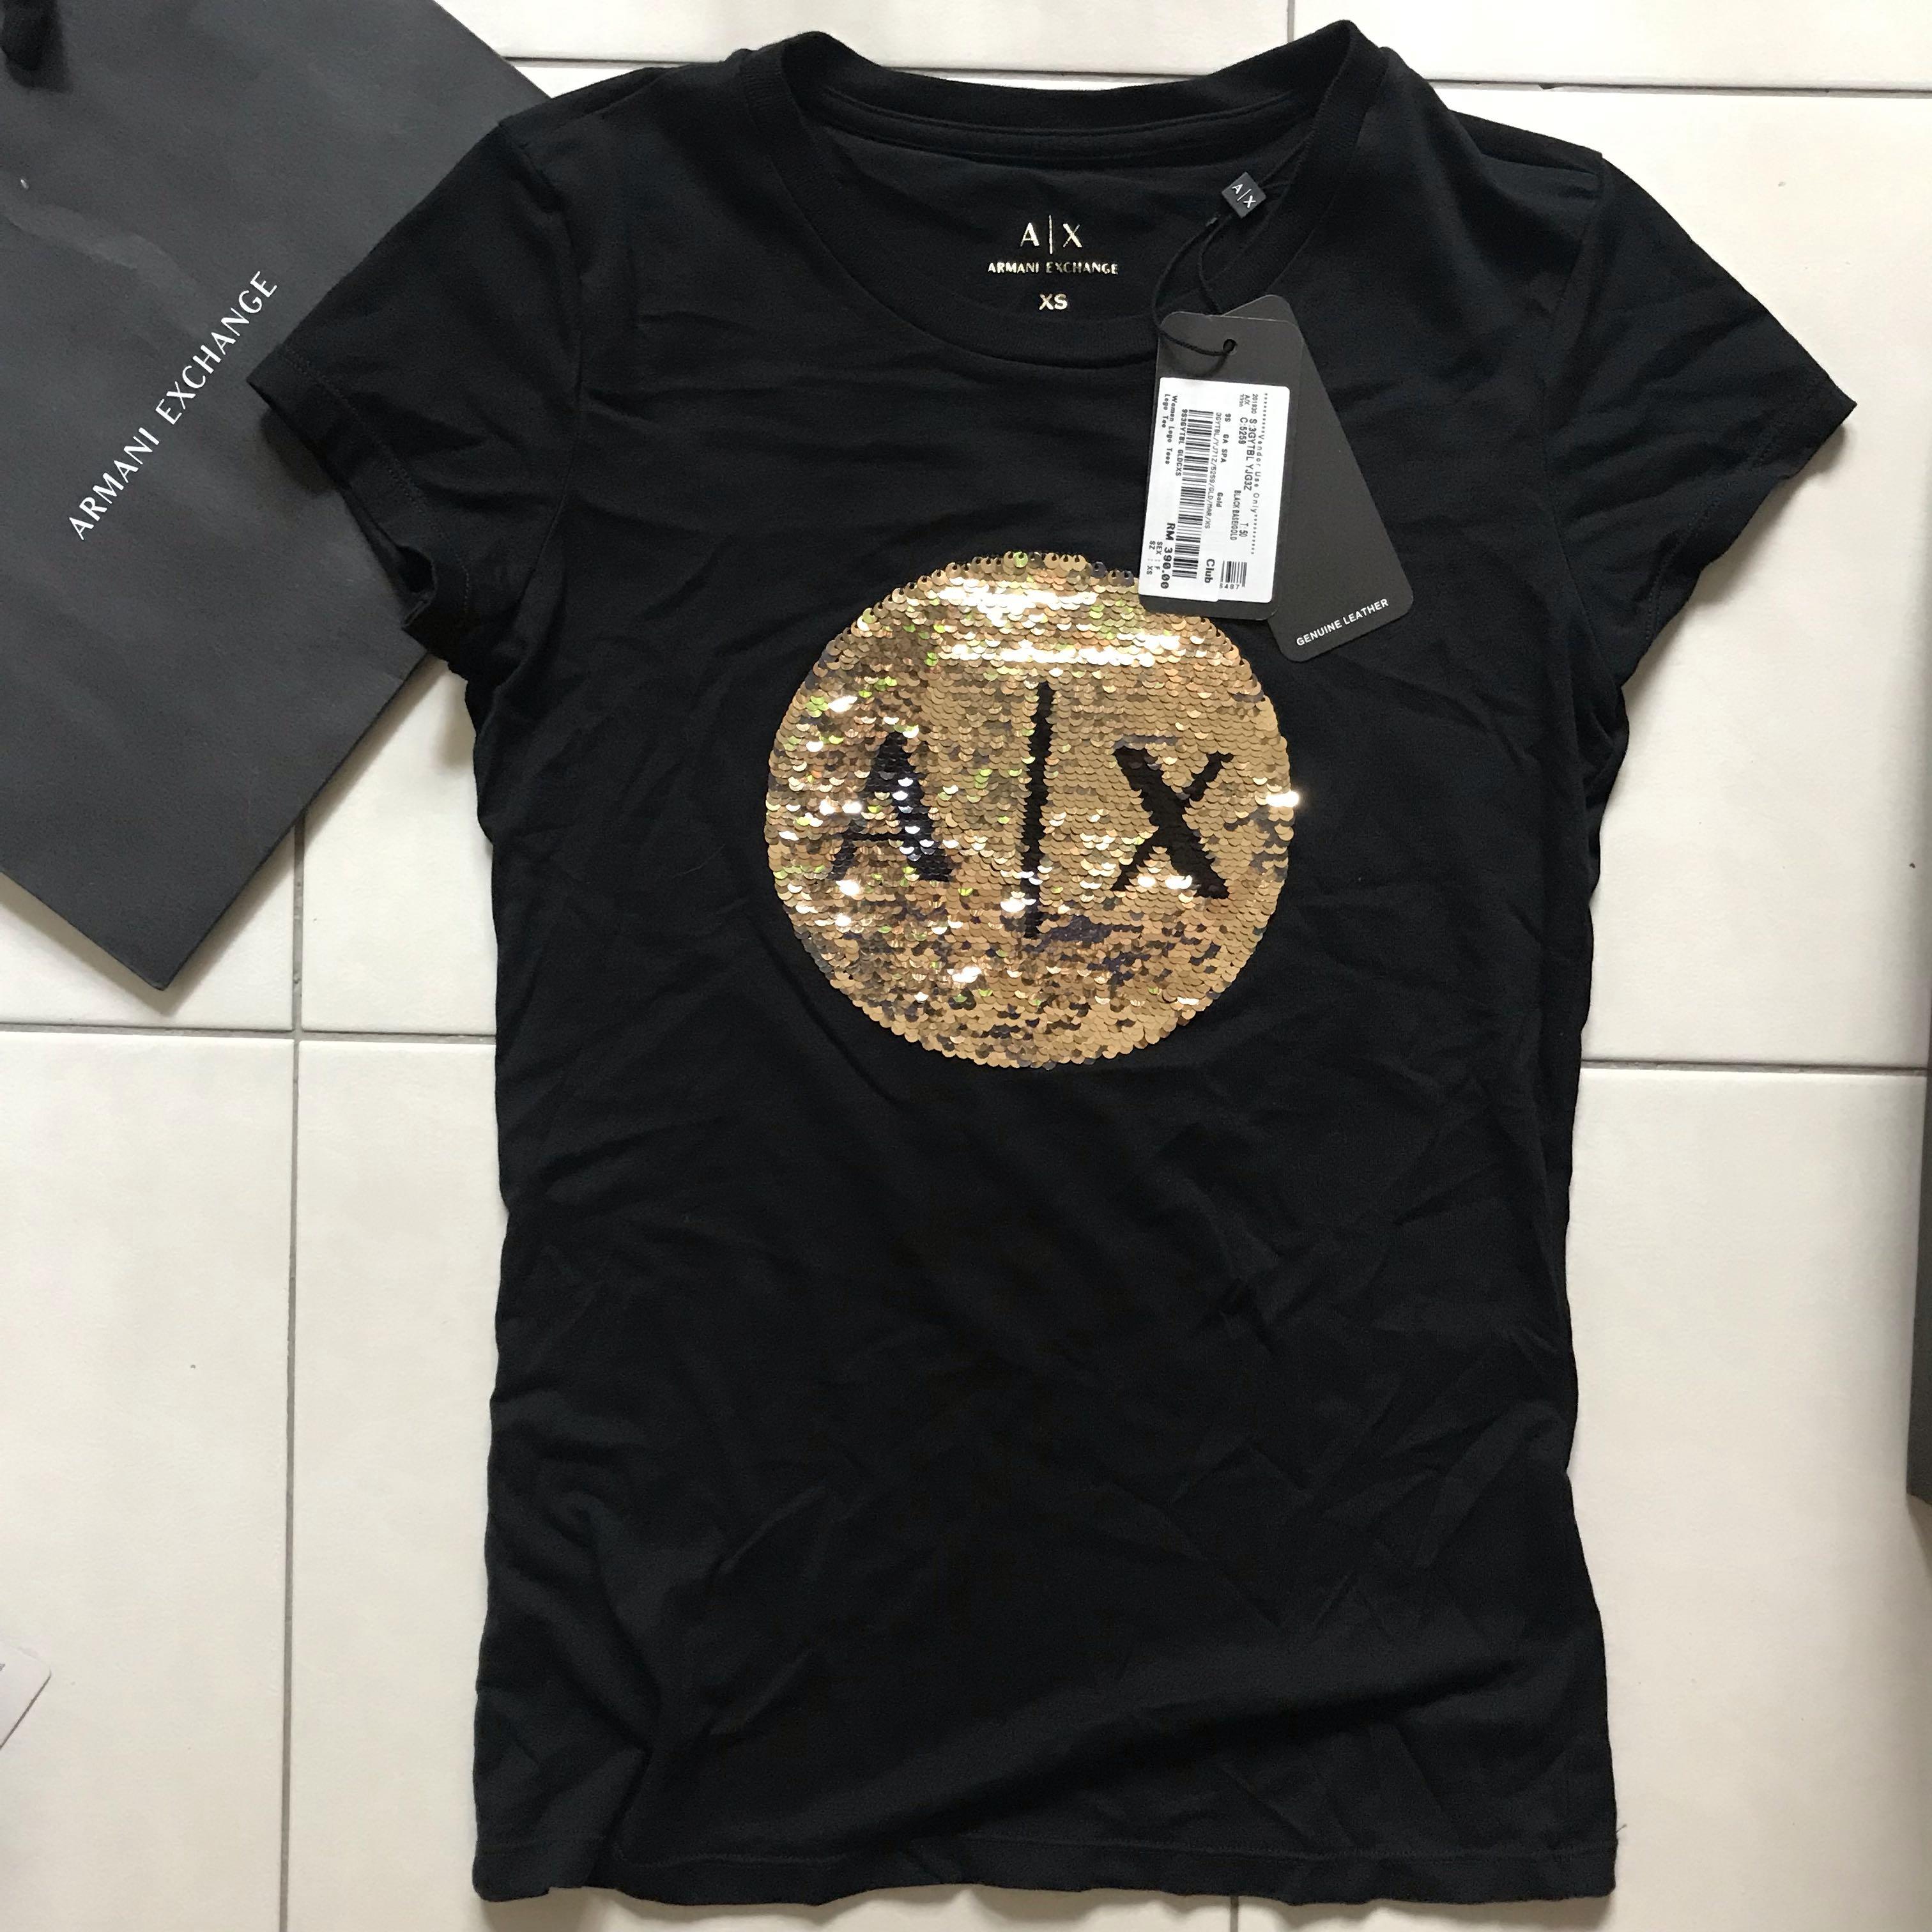 Armani Exchange T-shirt, Women's 